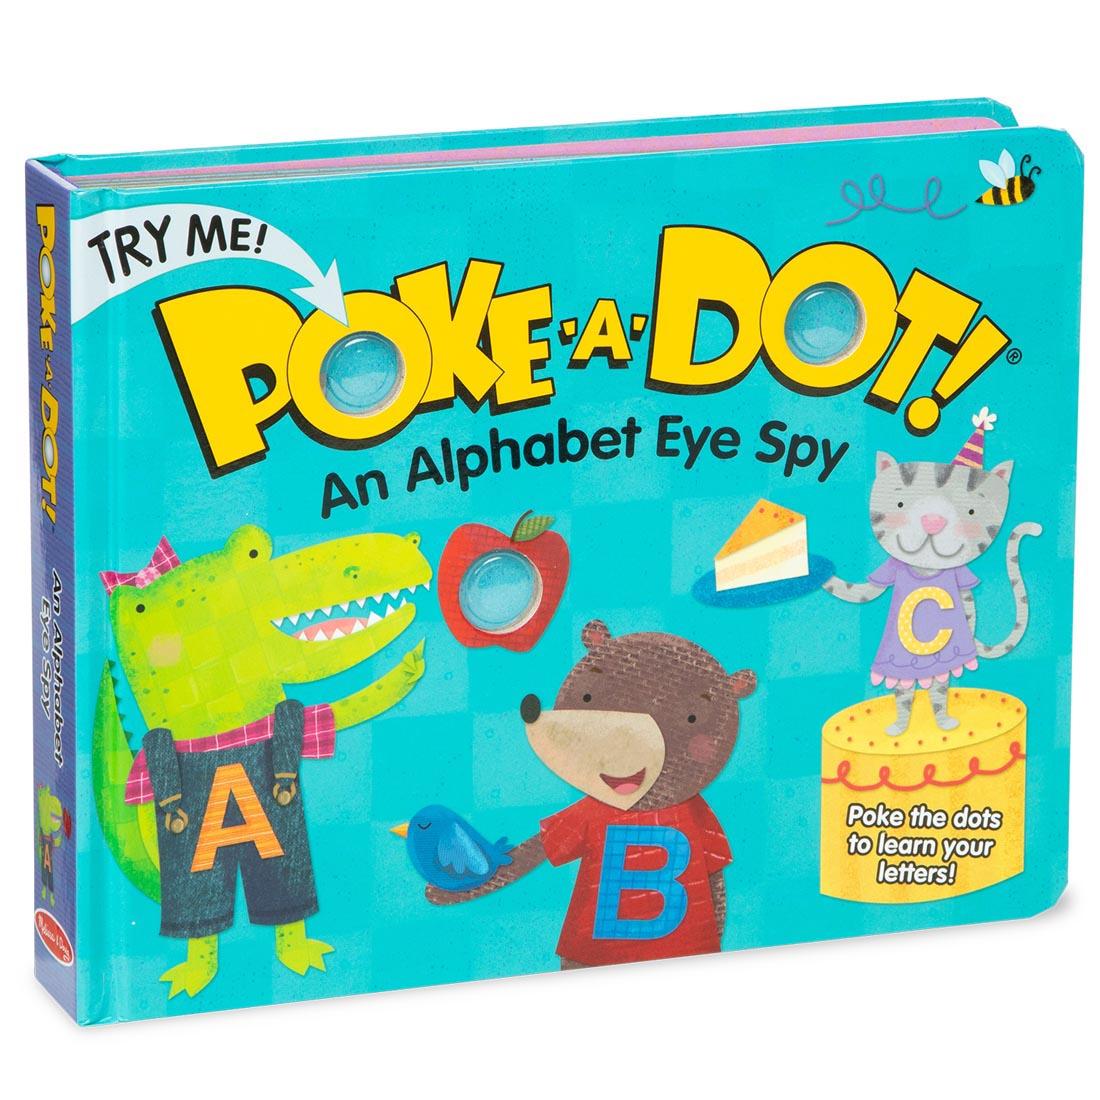 Poke-A-Dot Board Book: An Alphabet Eye Spy